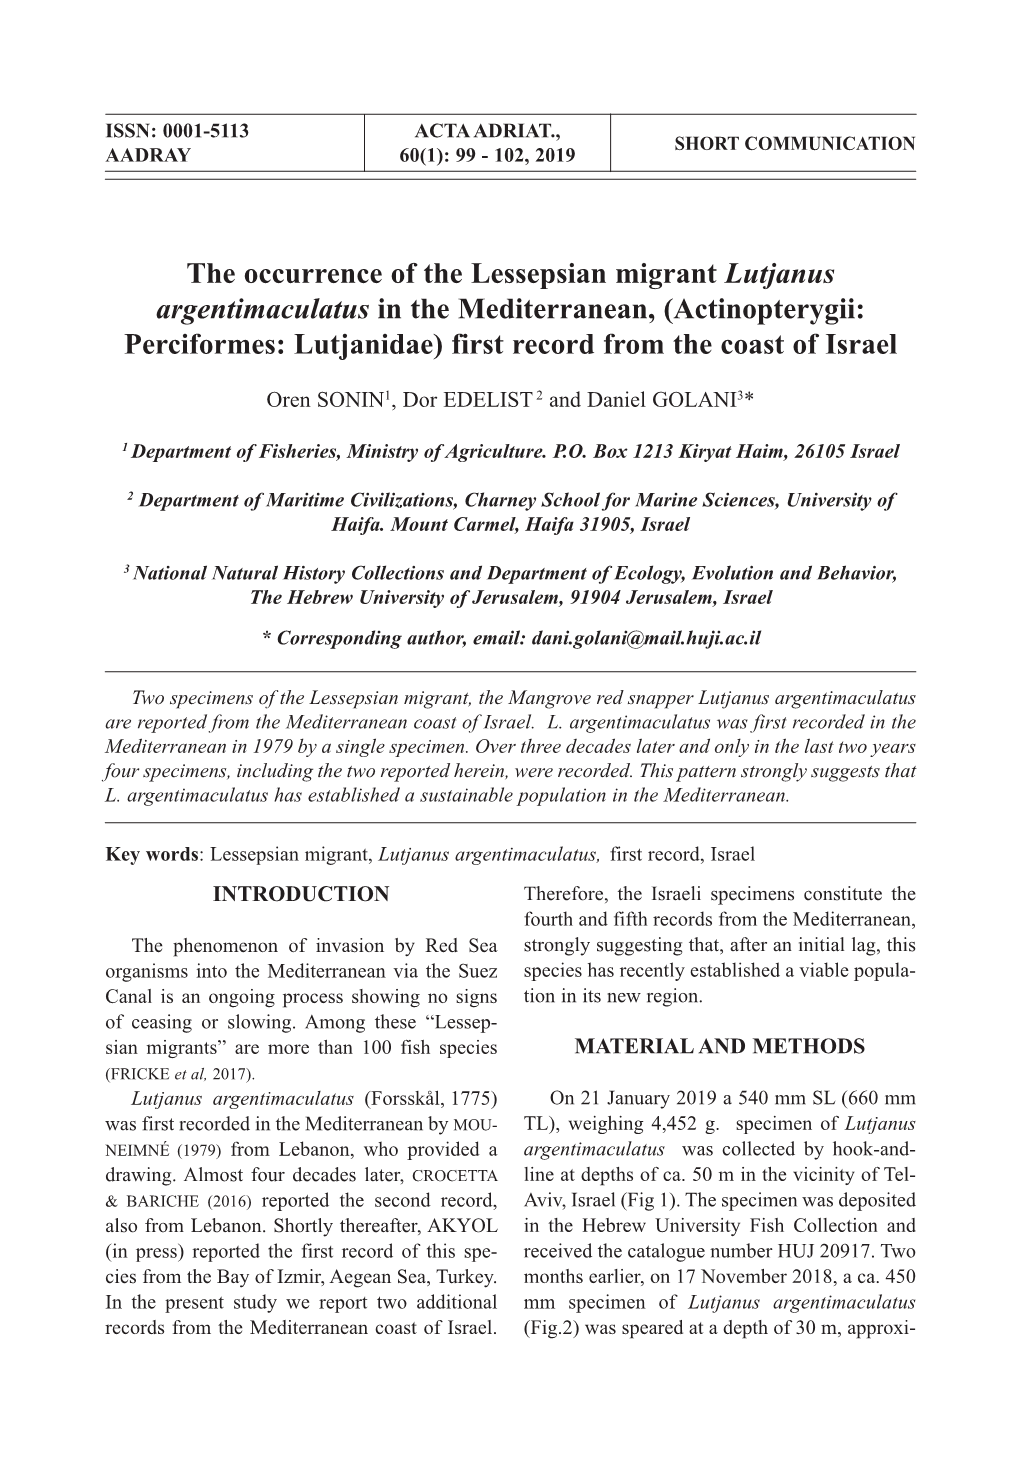 The Occurrence of the Lessepsian Migrant Lutjanus Argentimaculatus